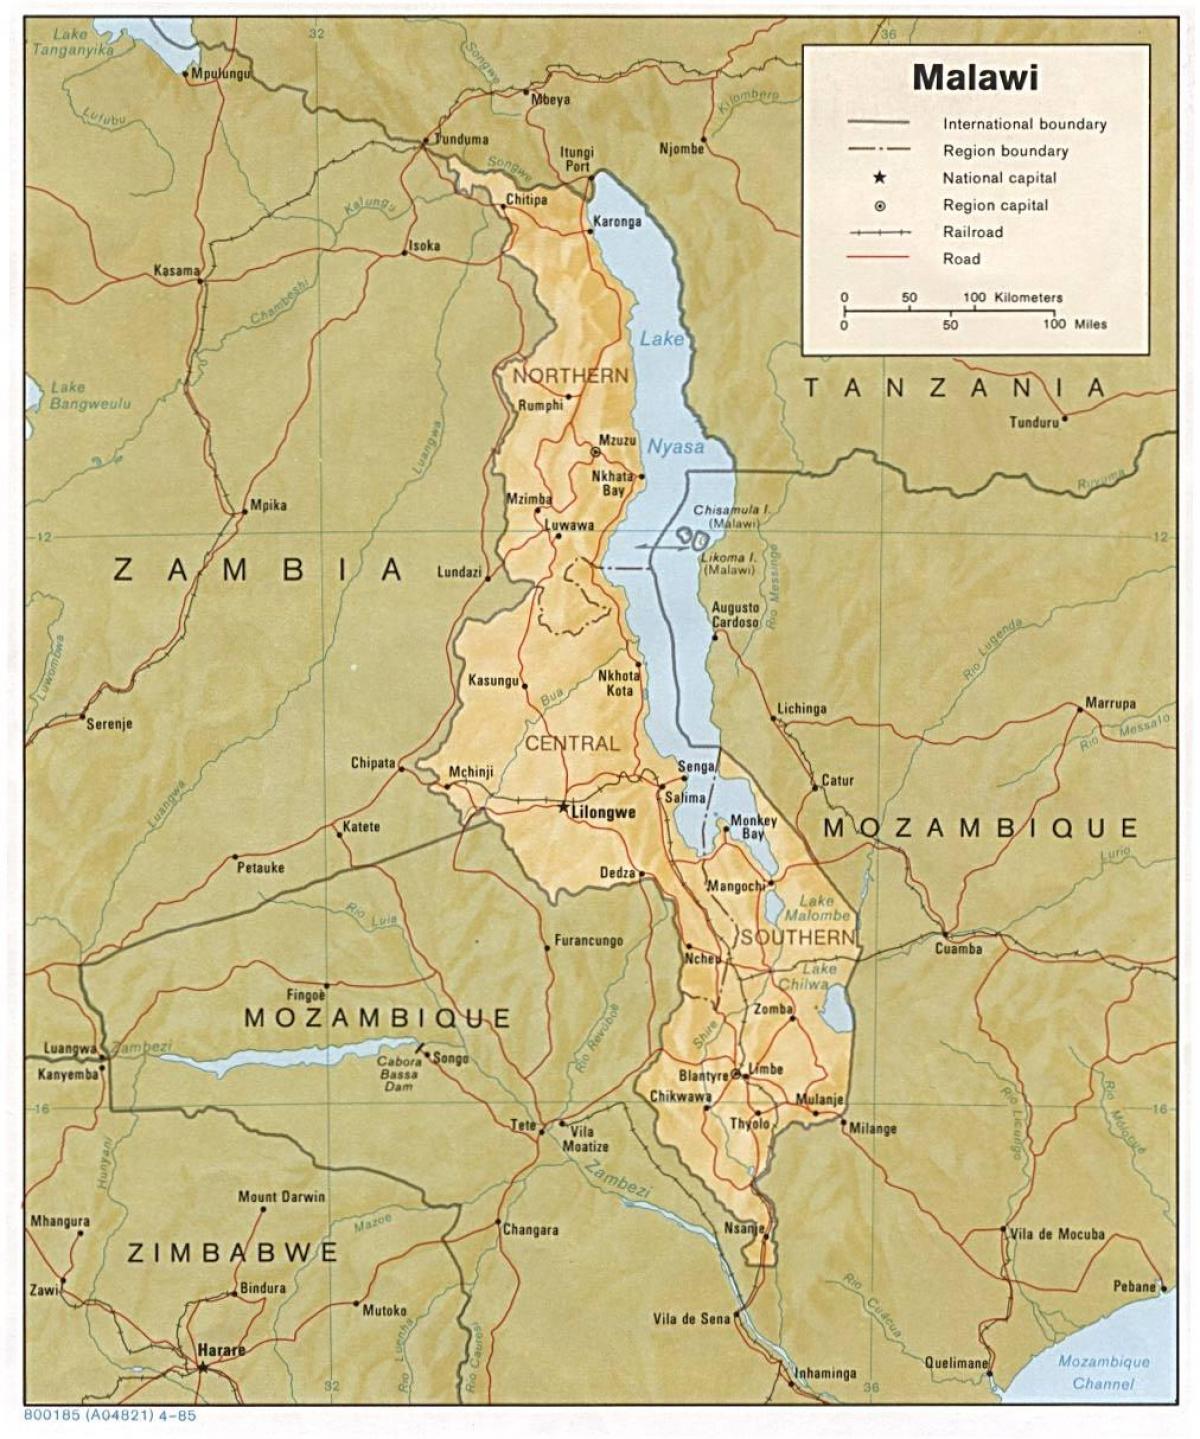 lake Malawi på karta